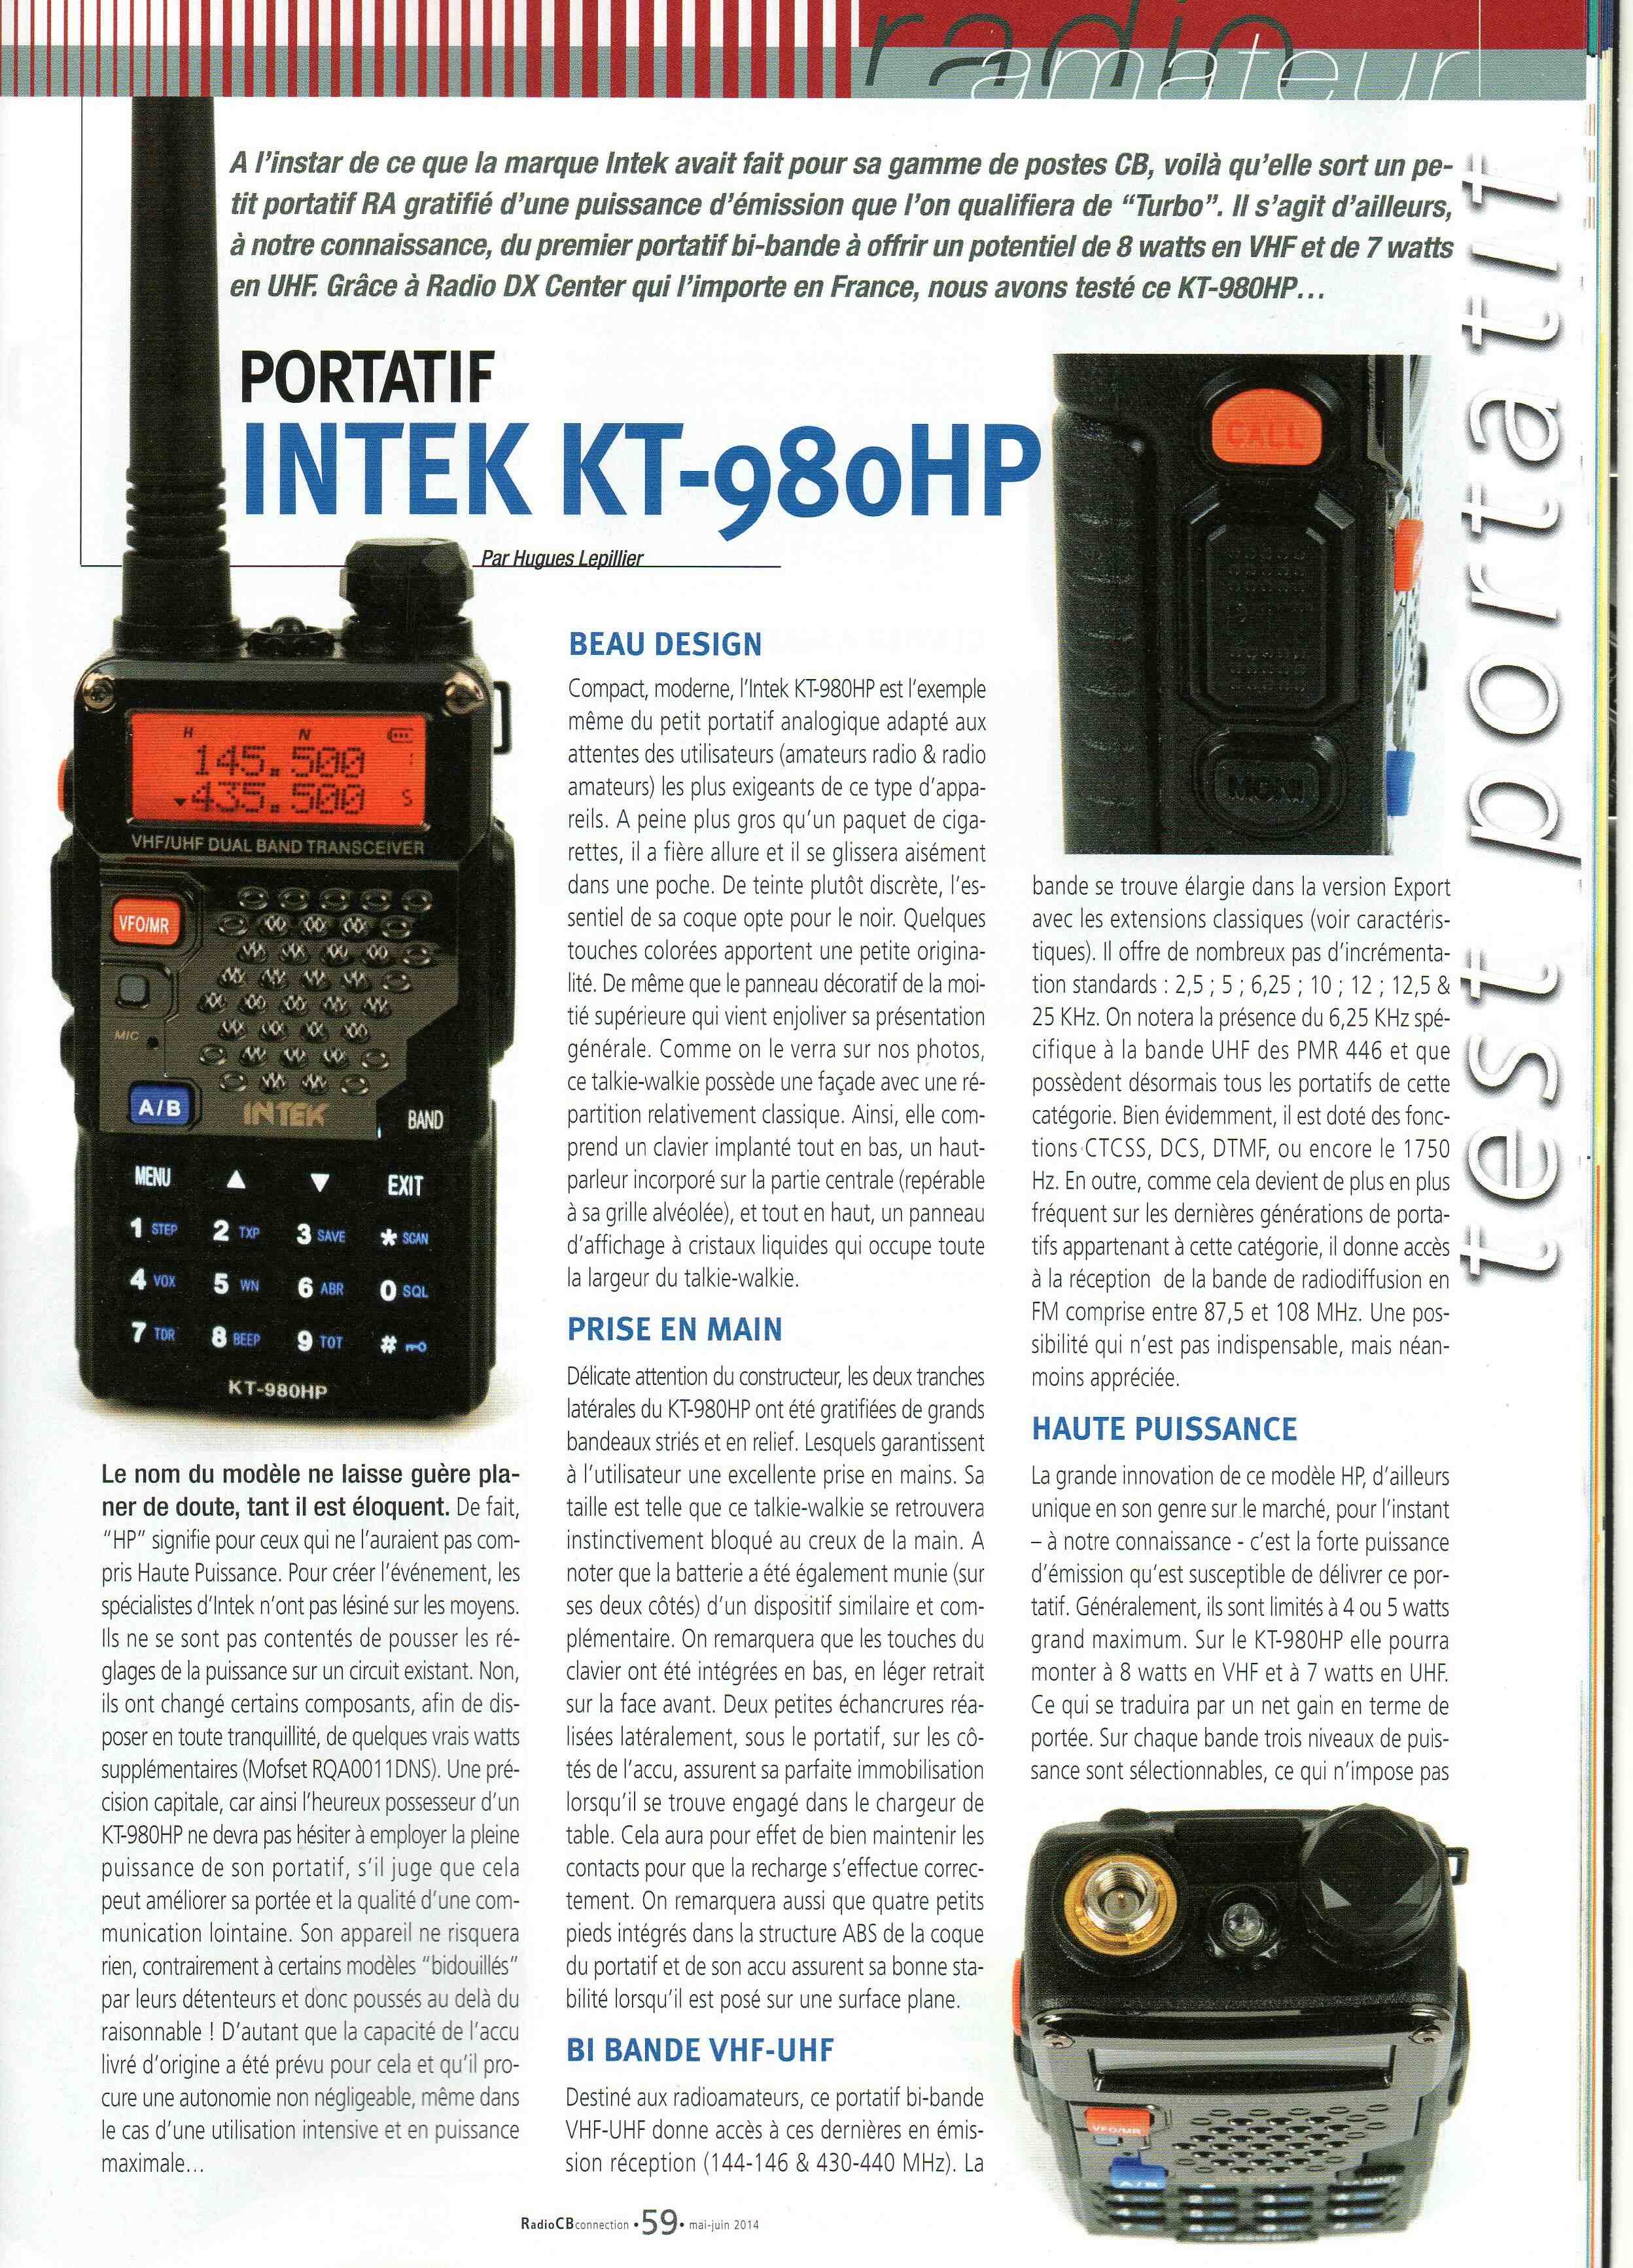 Intek KT-980HP (Portable) Img94410